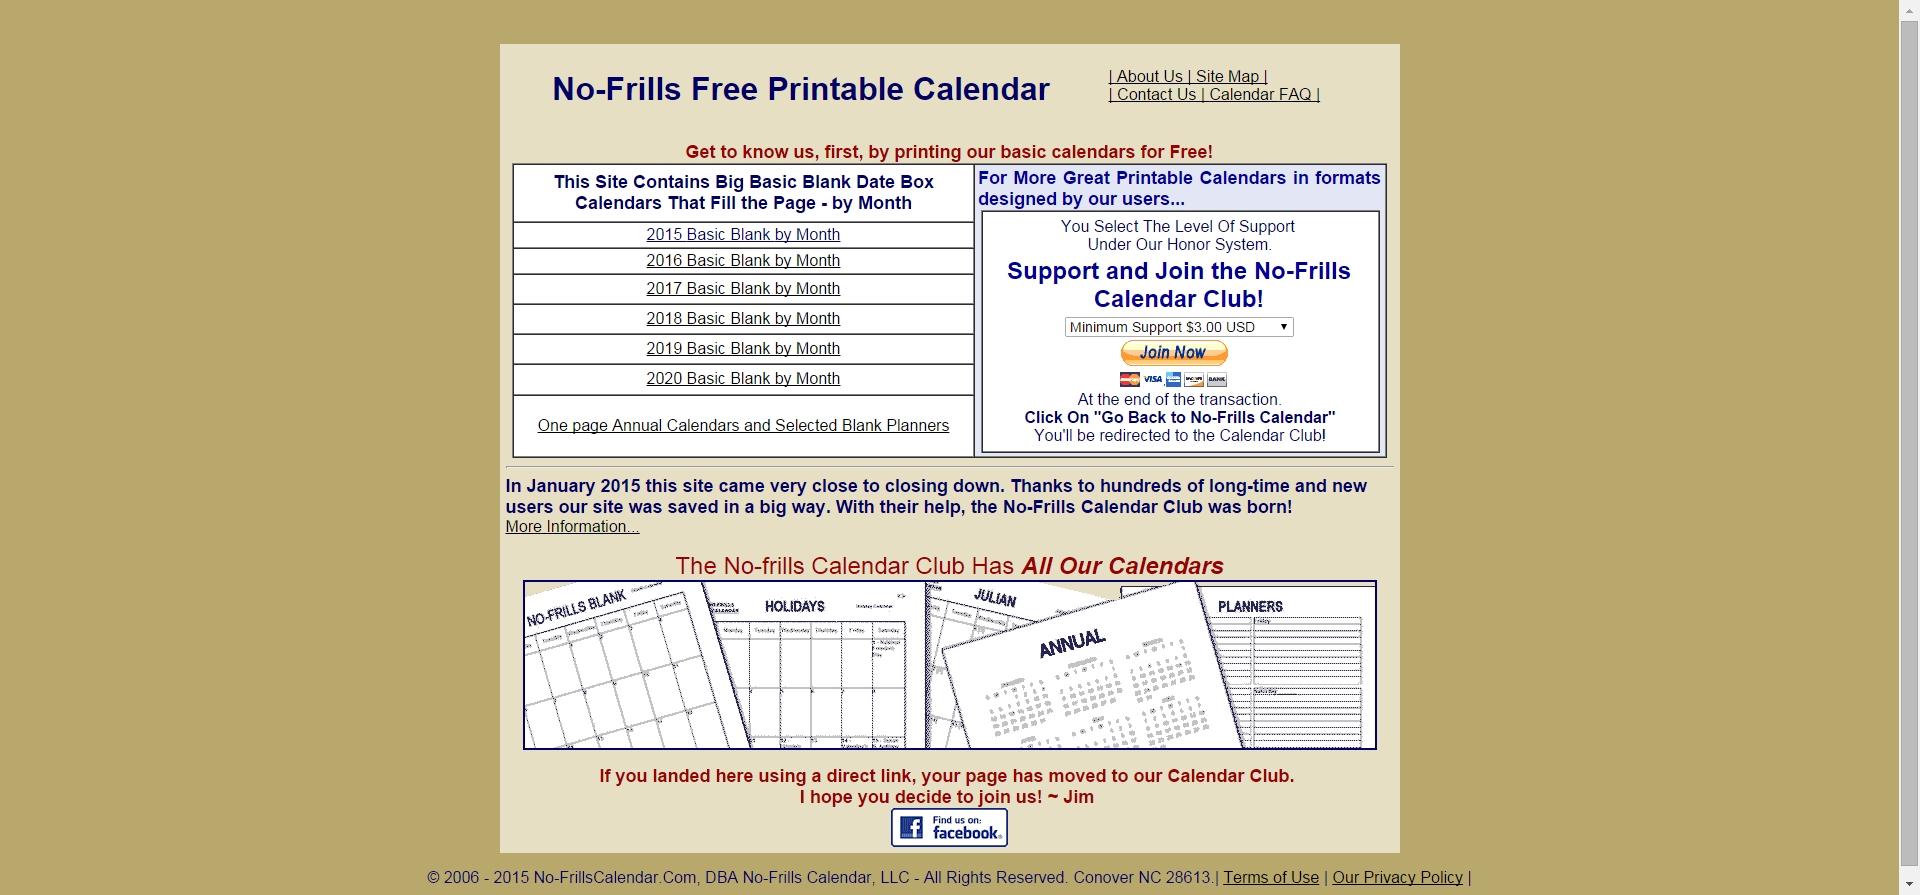 No-Frills Free Printable Calendar - Big Blank Date Box By